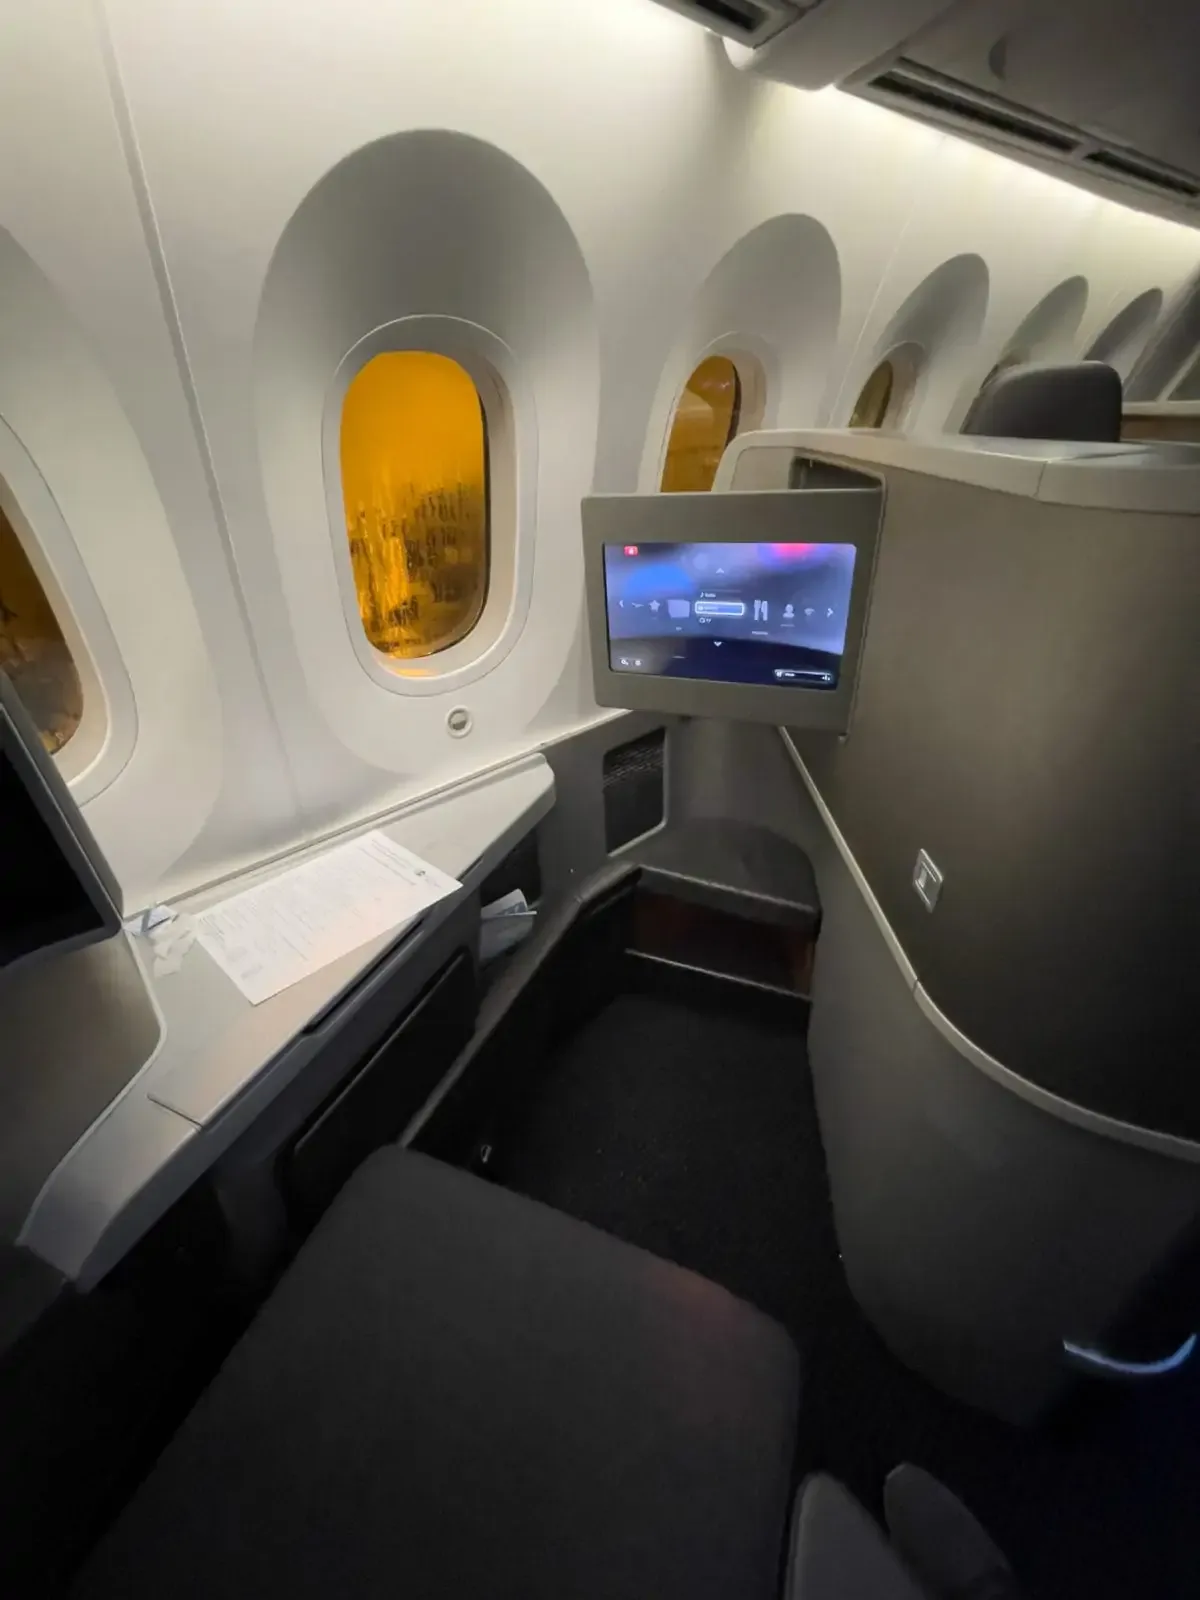 787-8 Business Class Window Seat